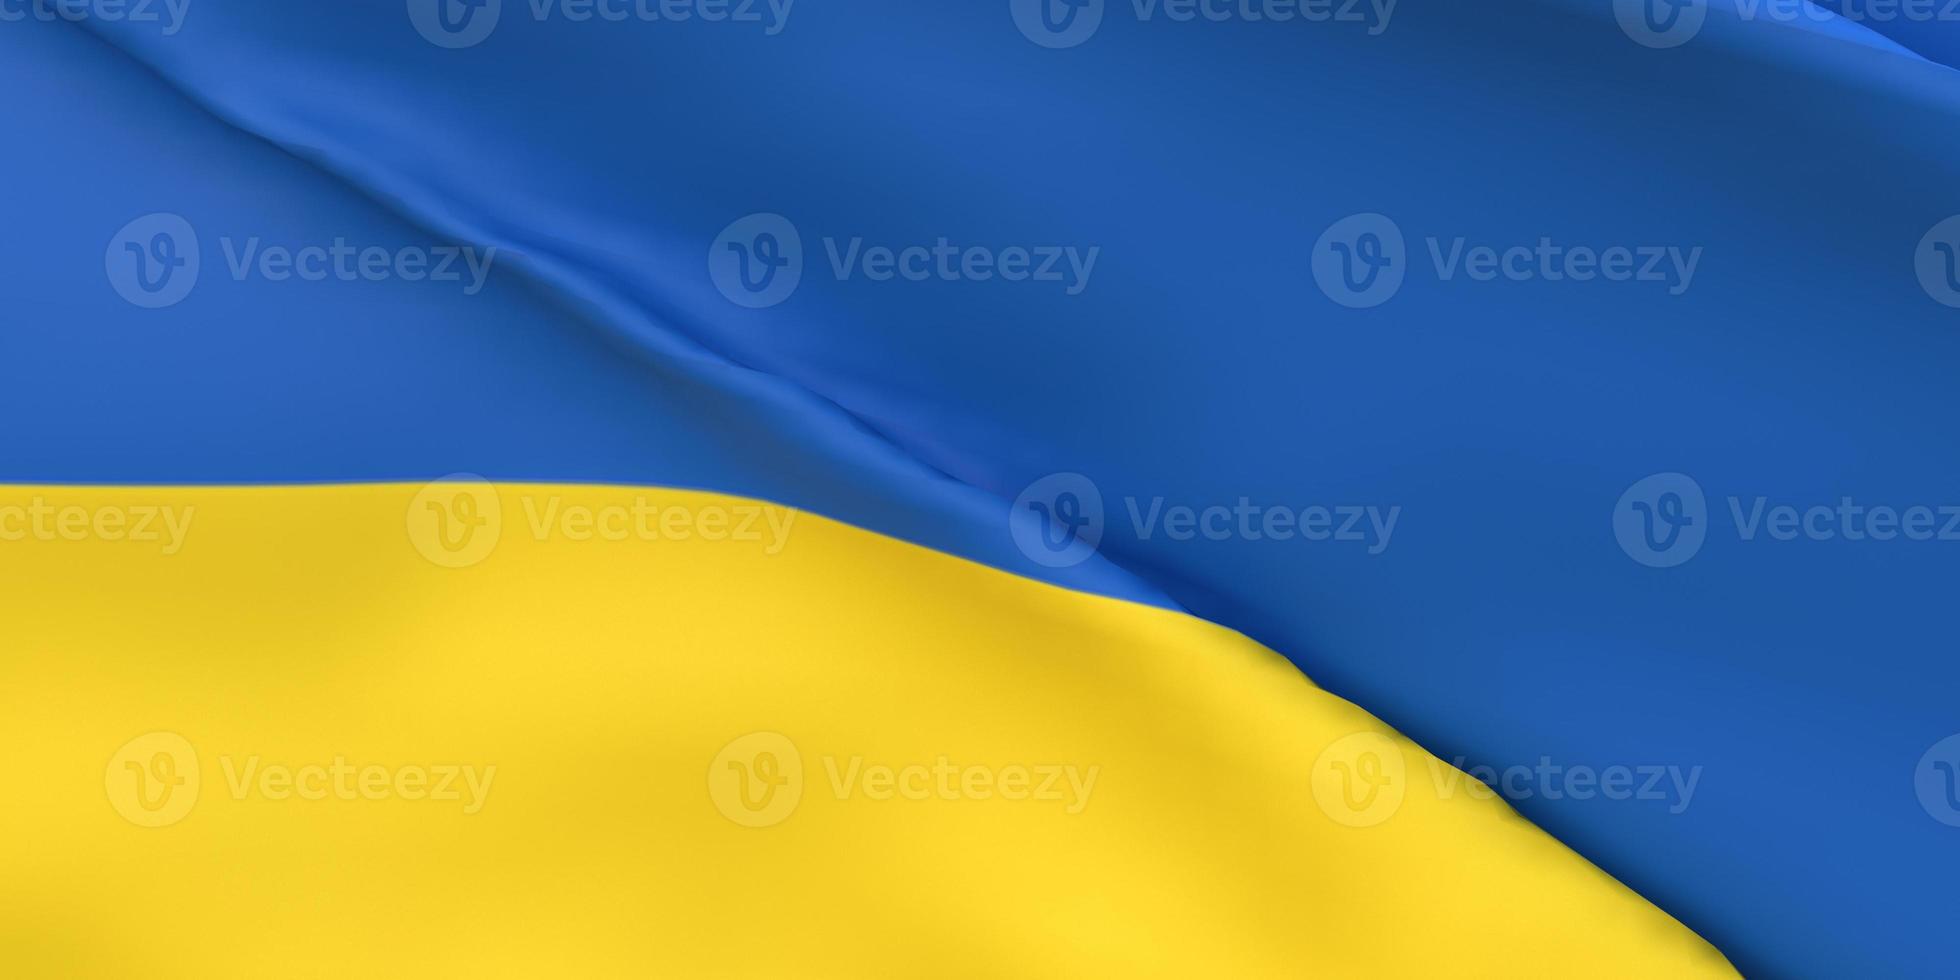 Ukraine flag yellow blue color waving patriotism national symbol peace ukrainian freedom independence banner sign country government politic europe day democracy pride celebration festival emblem photo